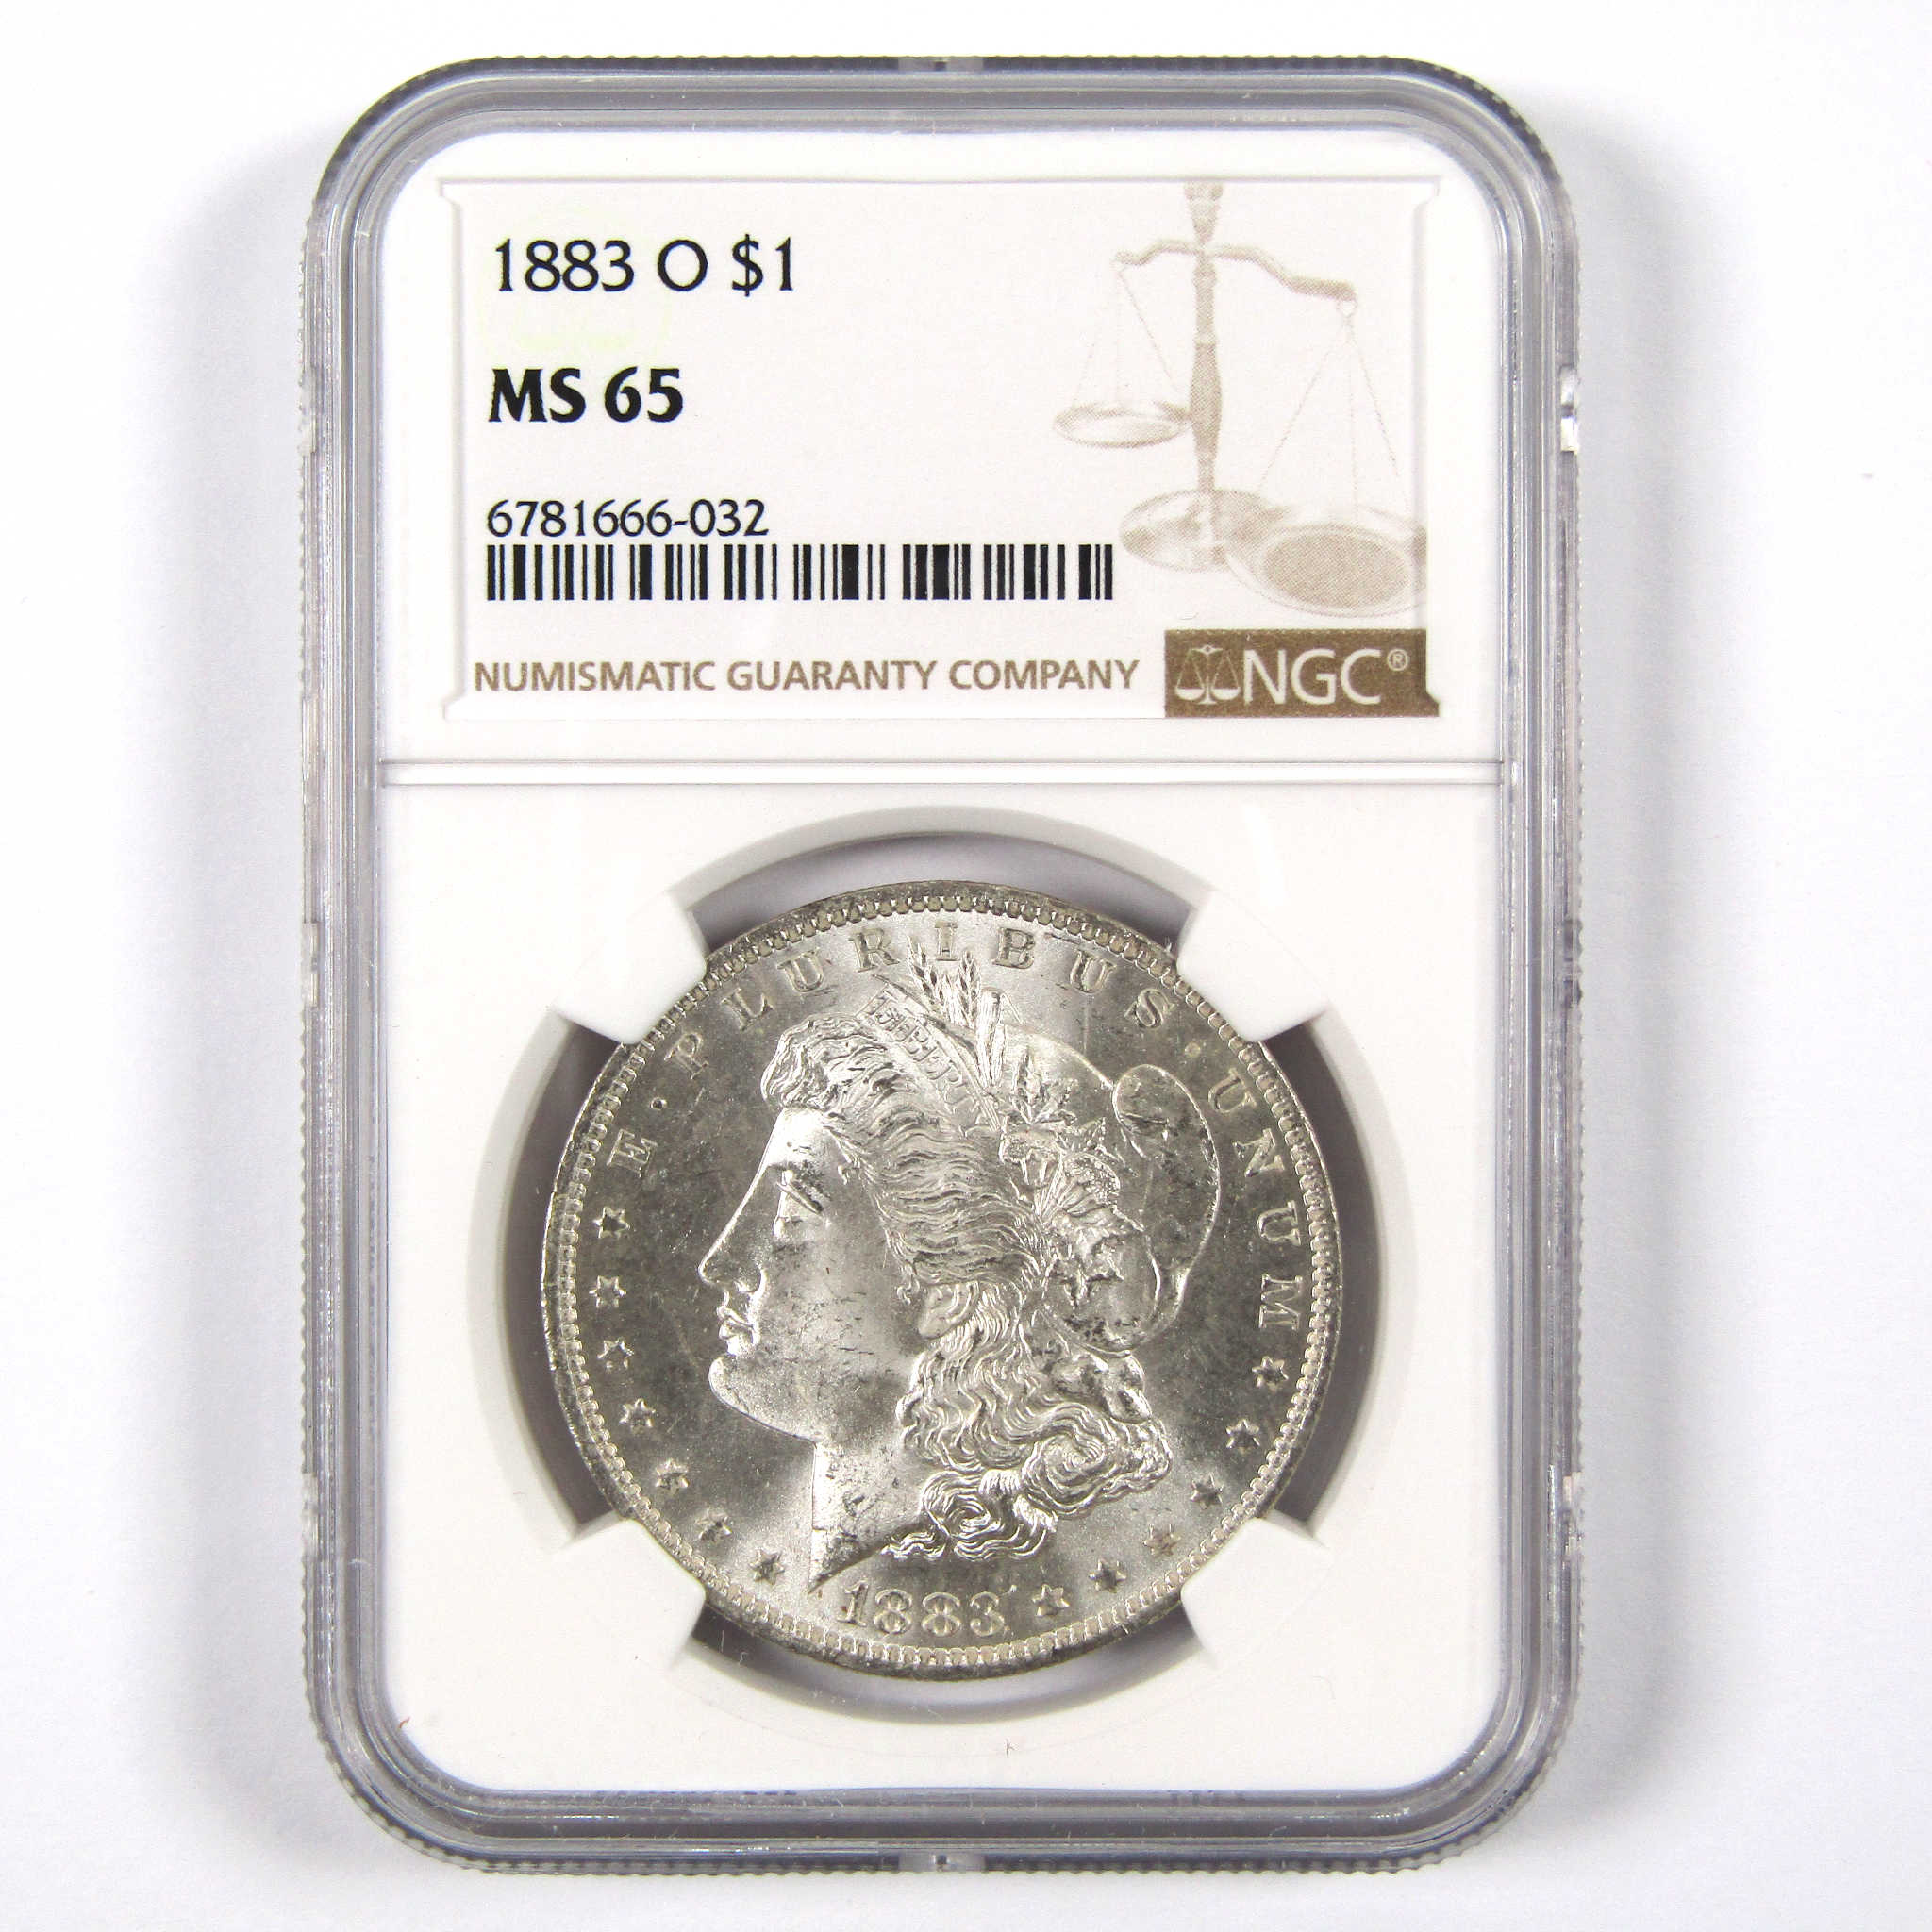 1883 O Morgan Dollar MS 65 NGC 90% Silver Uncirculated Coin SKU:I6151 - Morgan coin - Morgan silver dollar - Morgan silver dollar for sale - Profile Coins &amp; Collectibles